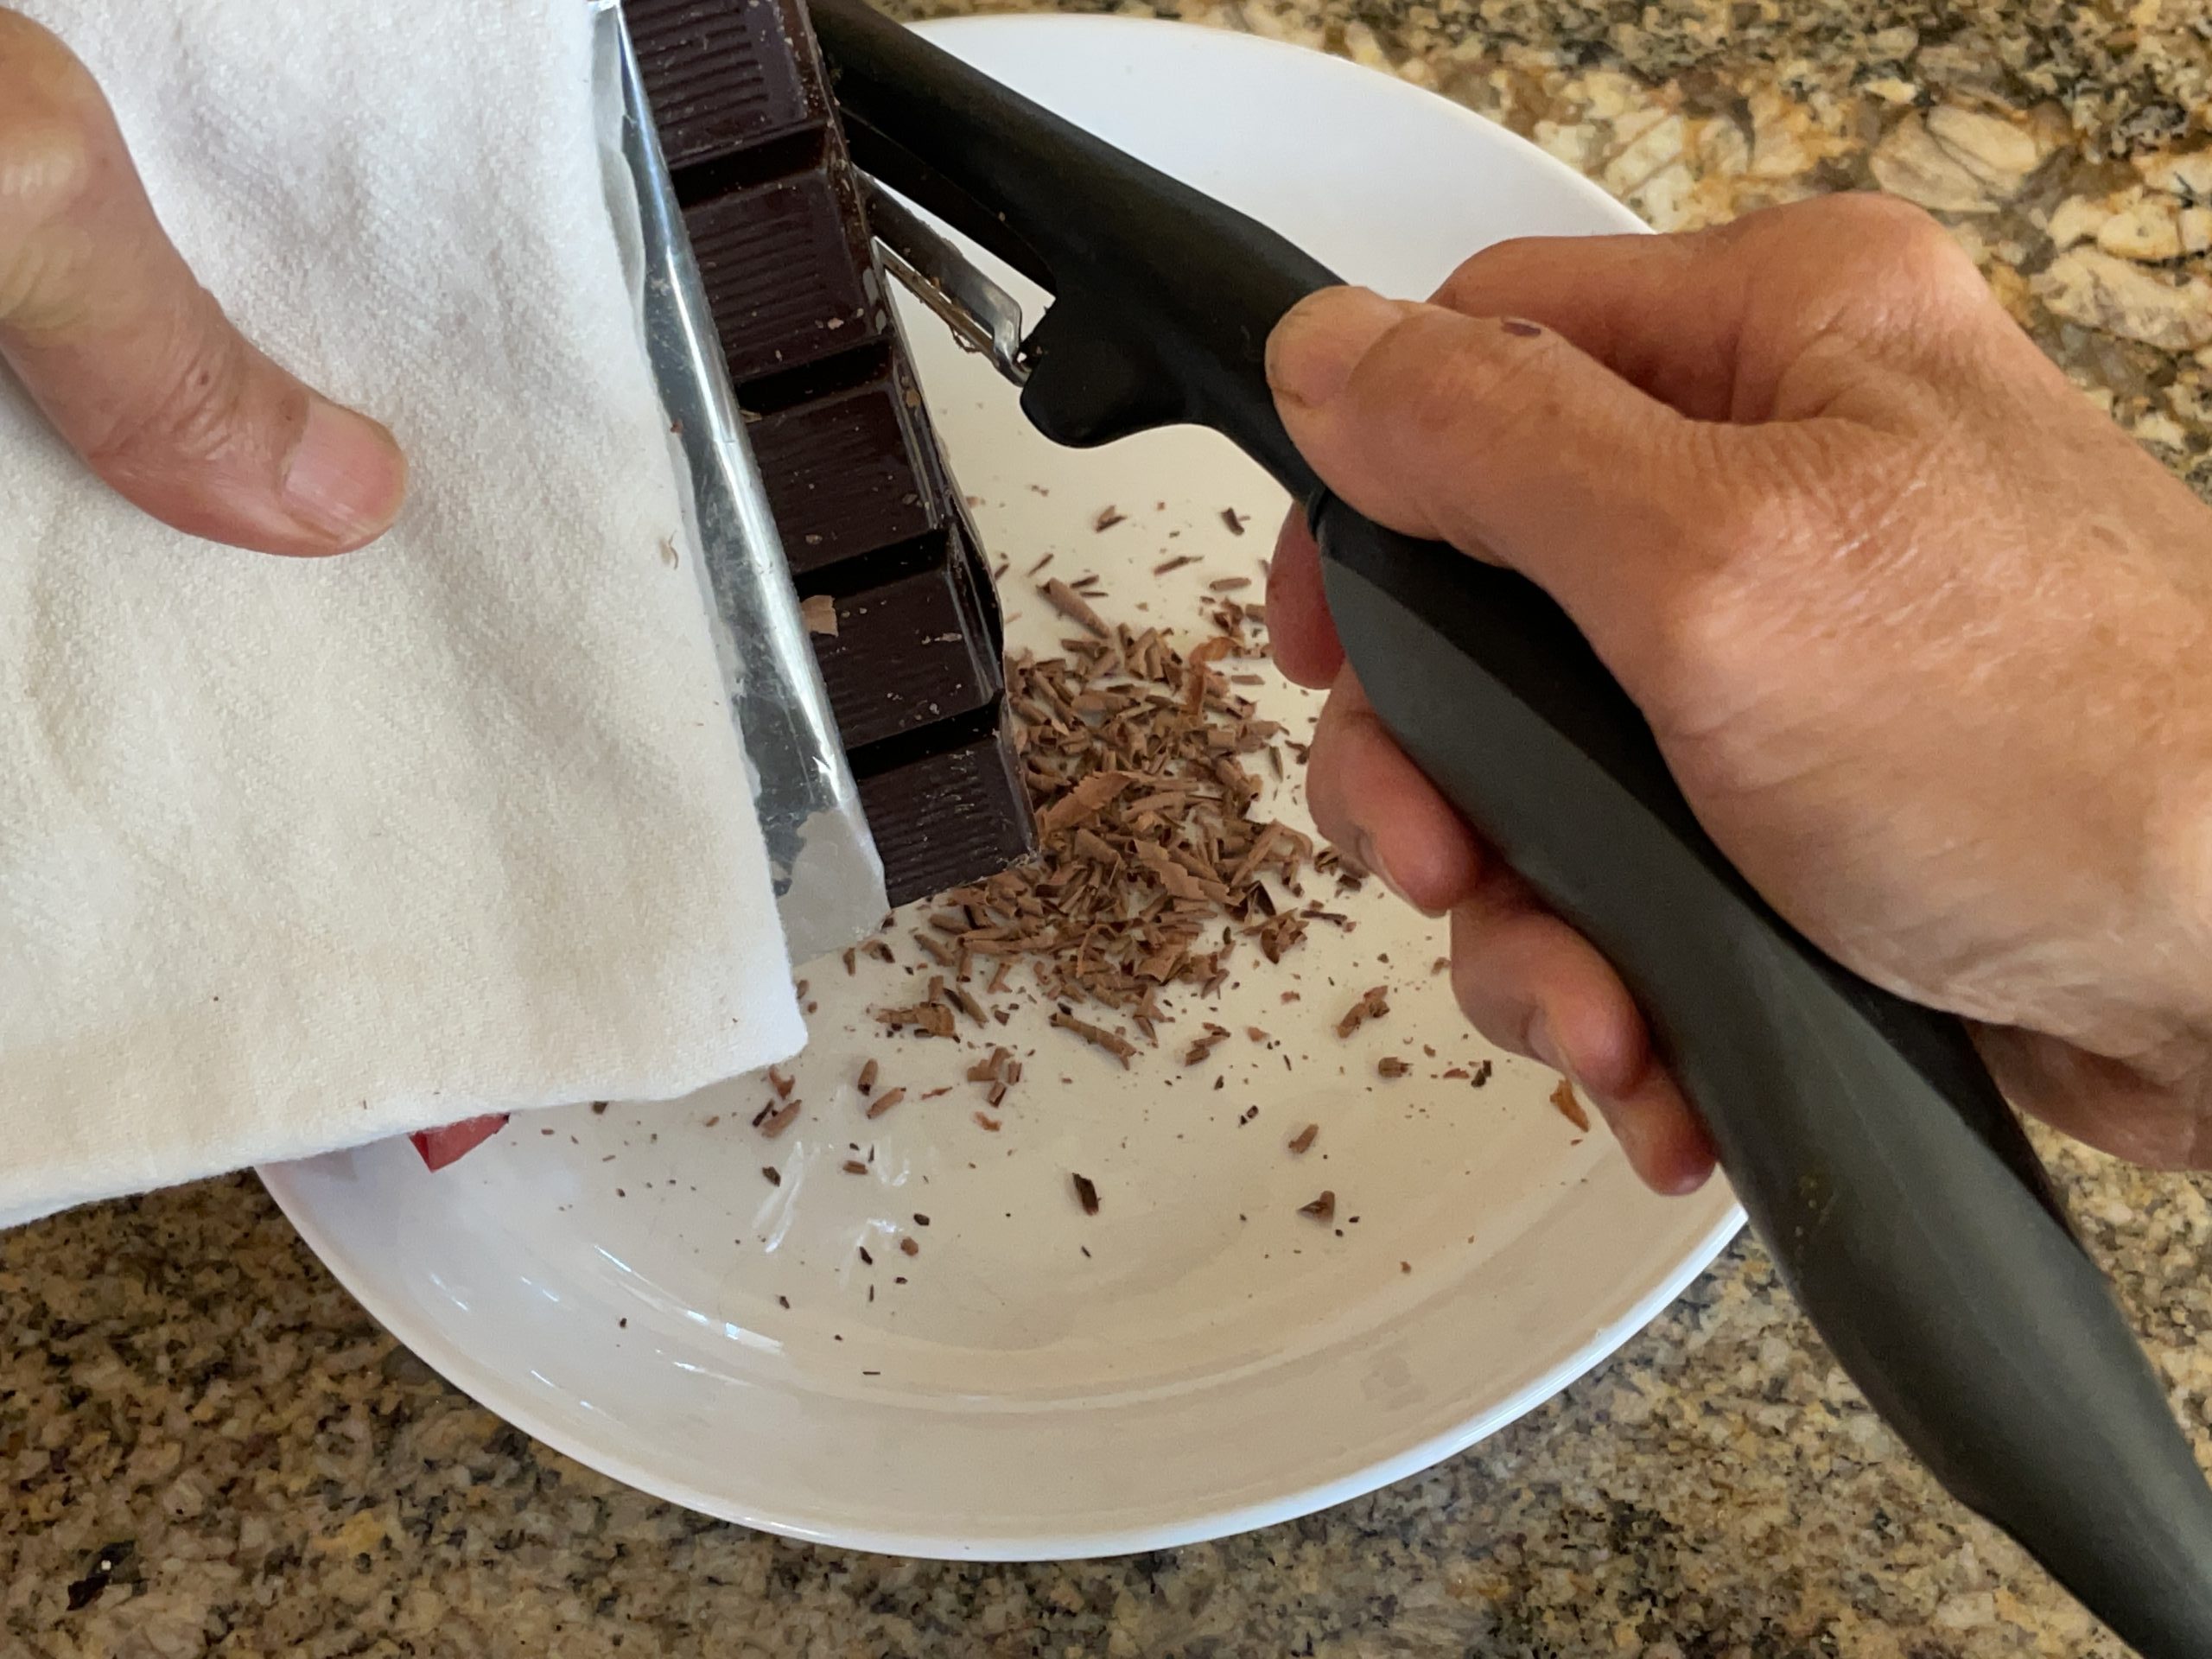 Shaving a bar of chocolate.